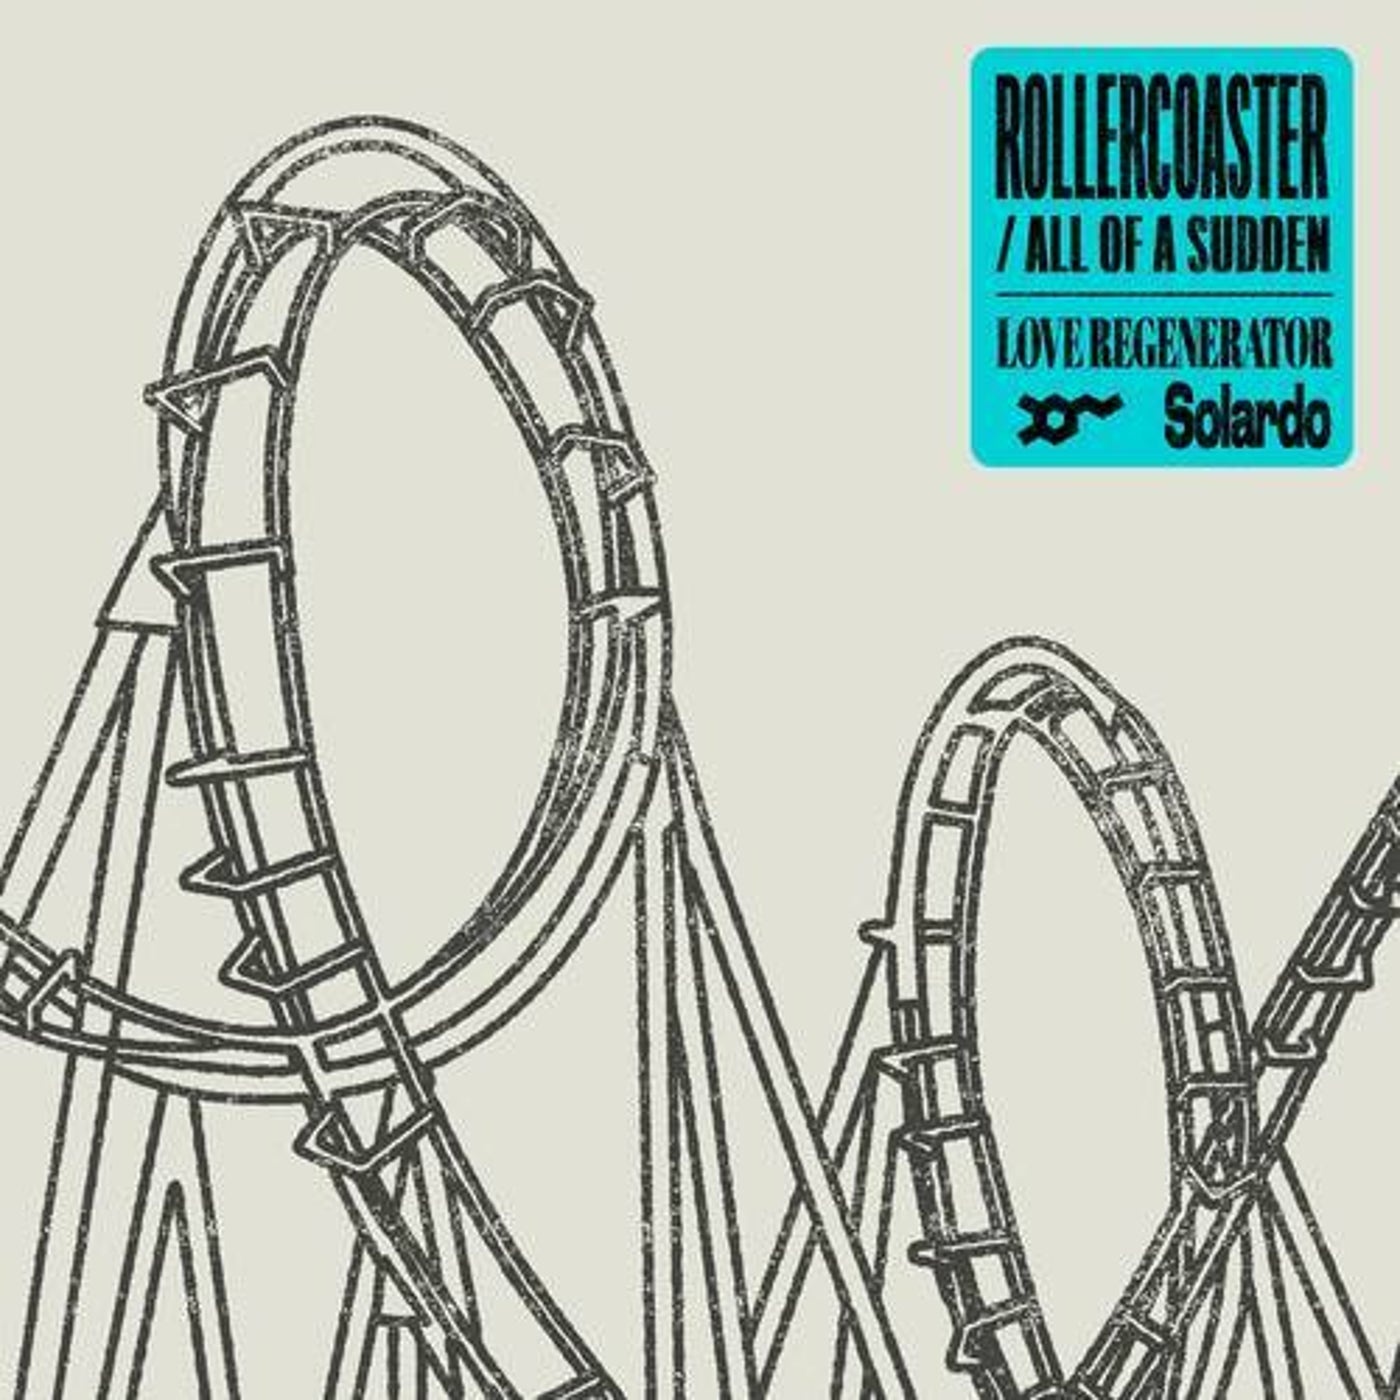 image cover: Solardo, Love Regenerator - Rollercoaster / G010004663773S